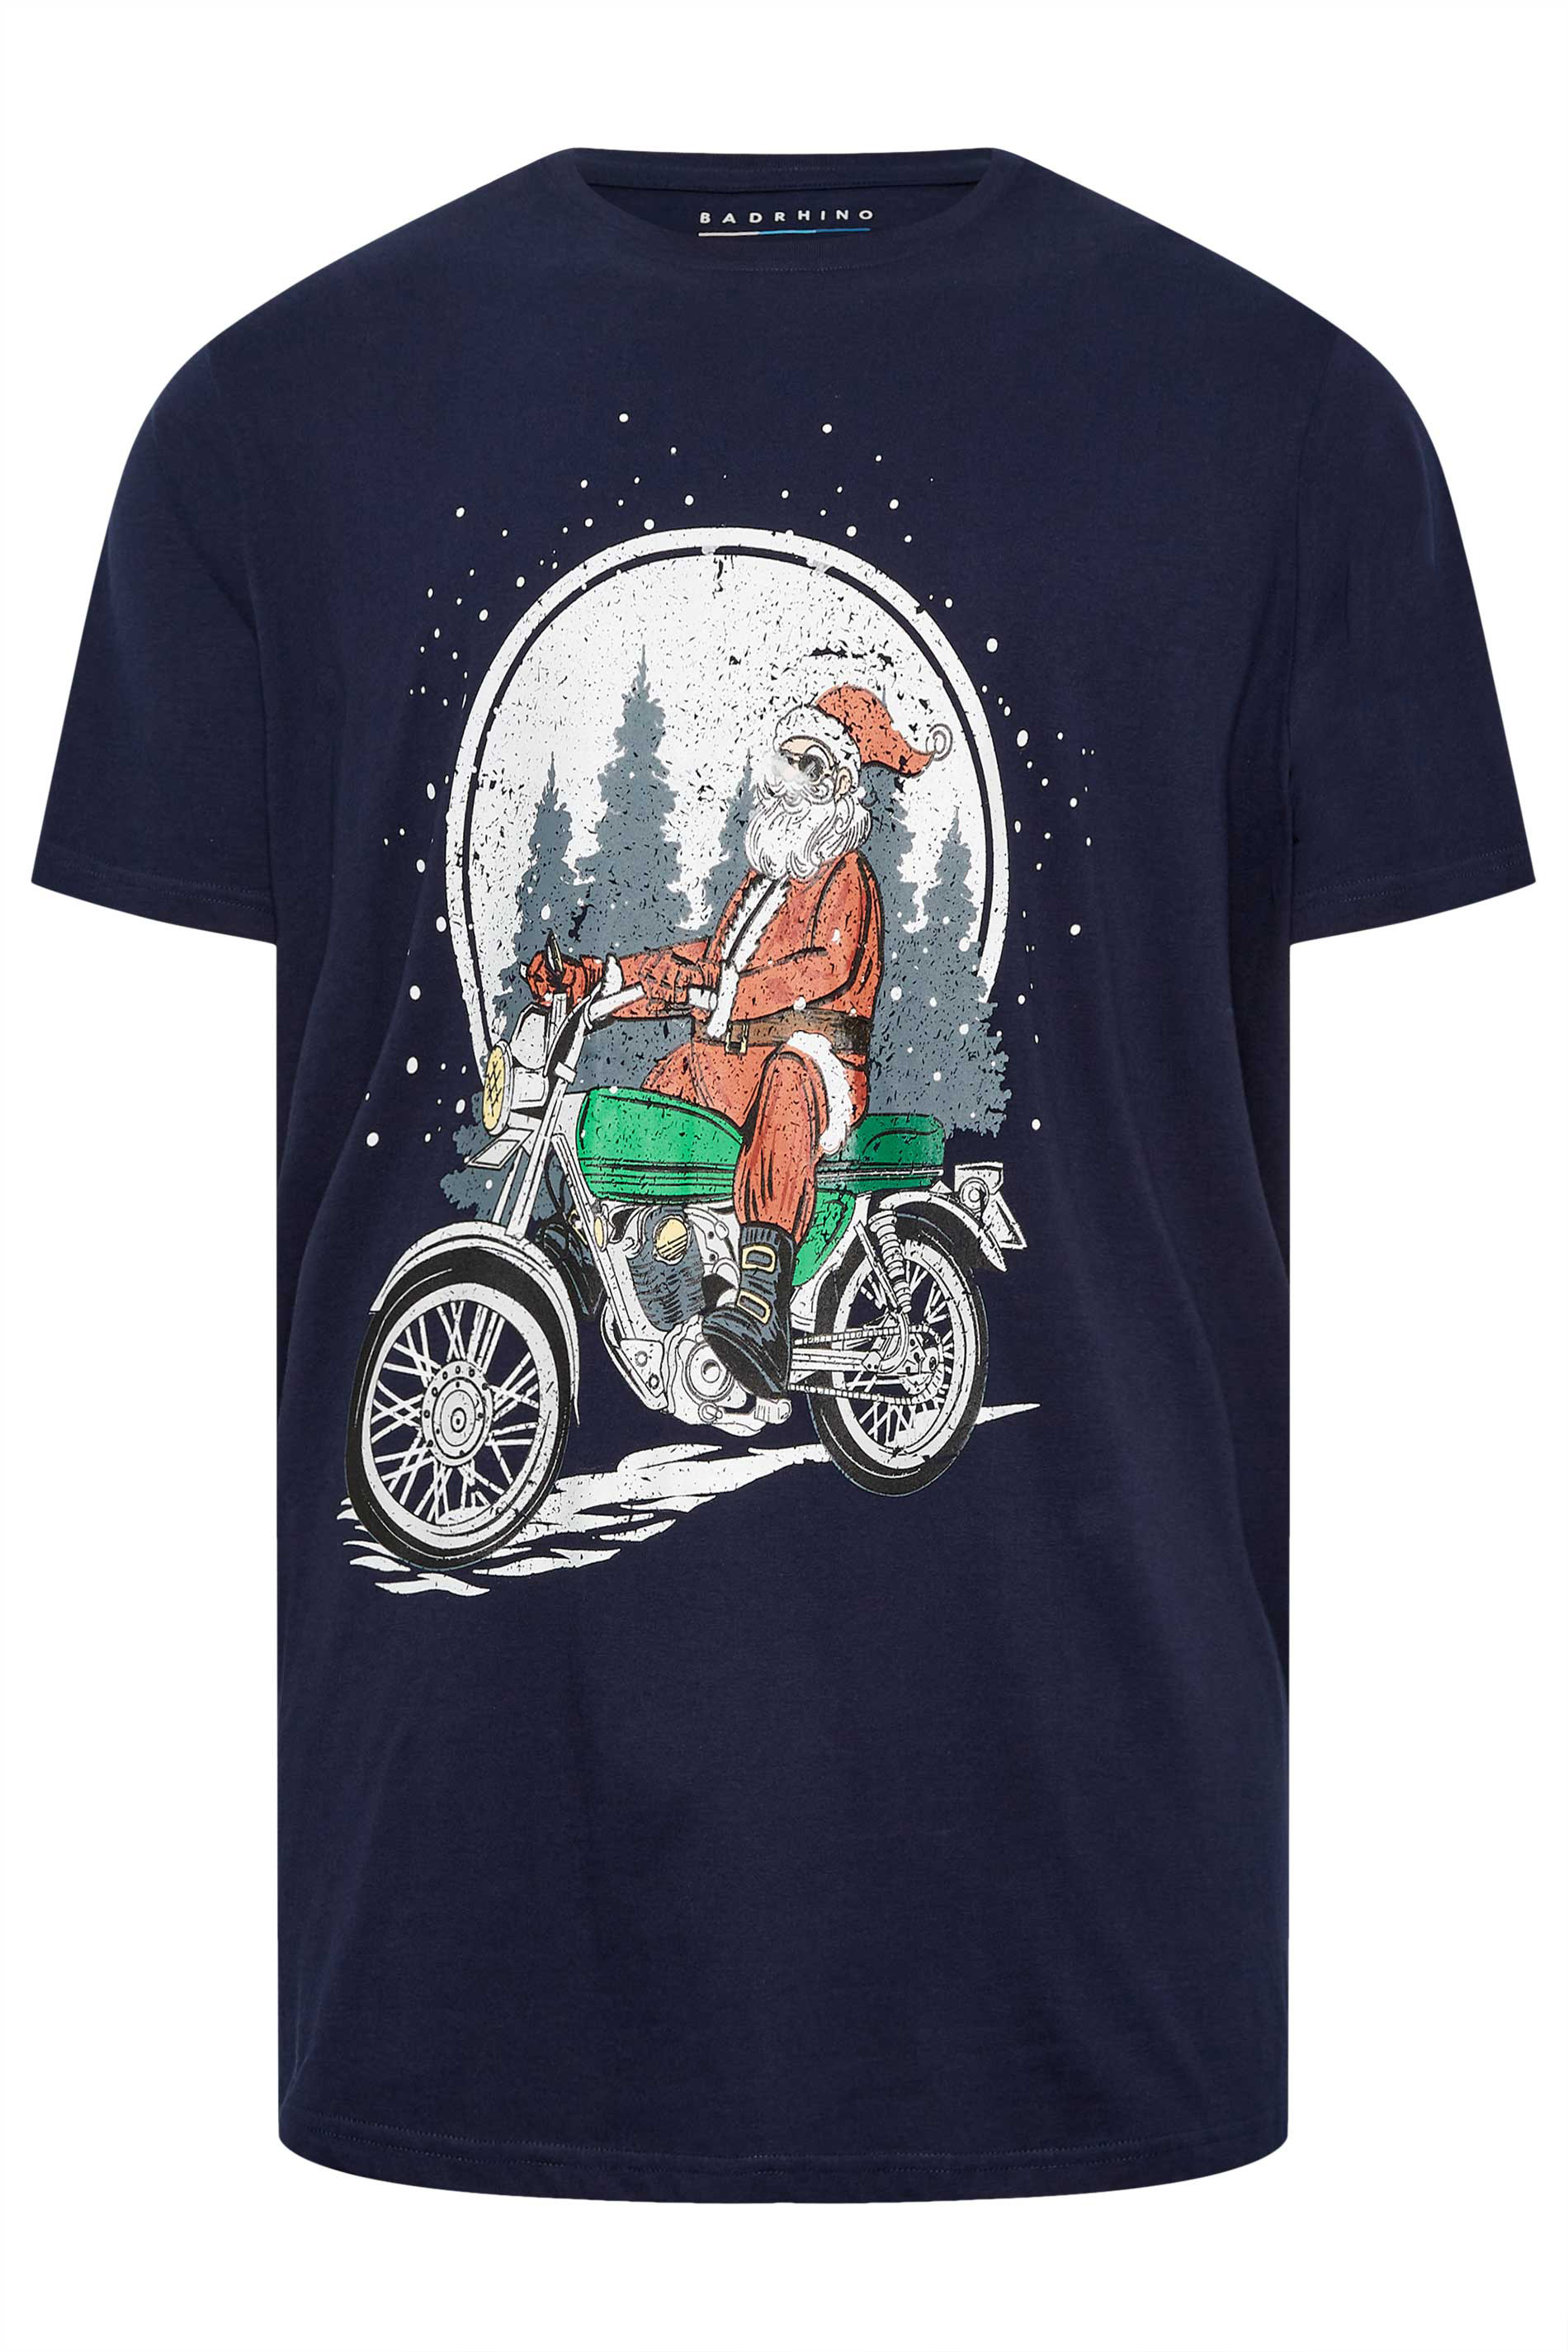 BadRhino Big & Tall Navy Blue Santa Motorbike Christmas T-Shirt | BadRhino 3